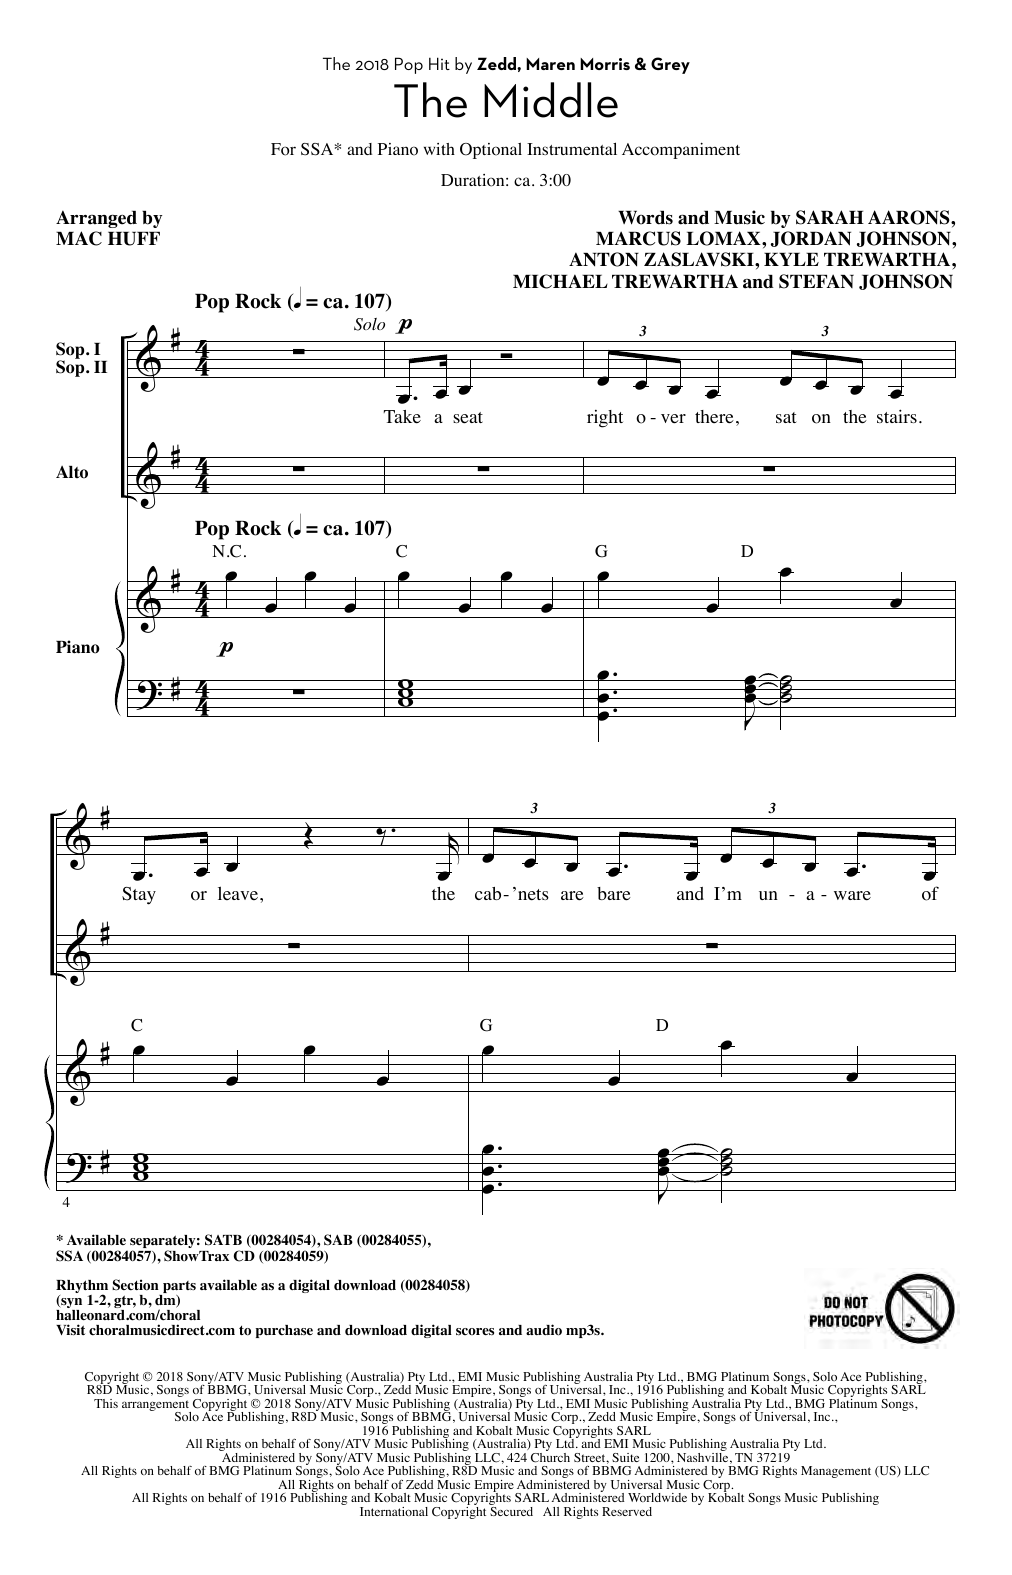 Zedd, Maren Morris & Grey The Middle (arr. Mac Huff) Sheet Music Notes & Chords for SSA - Download or Print PDF